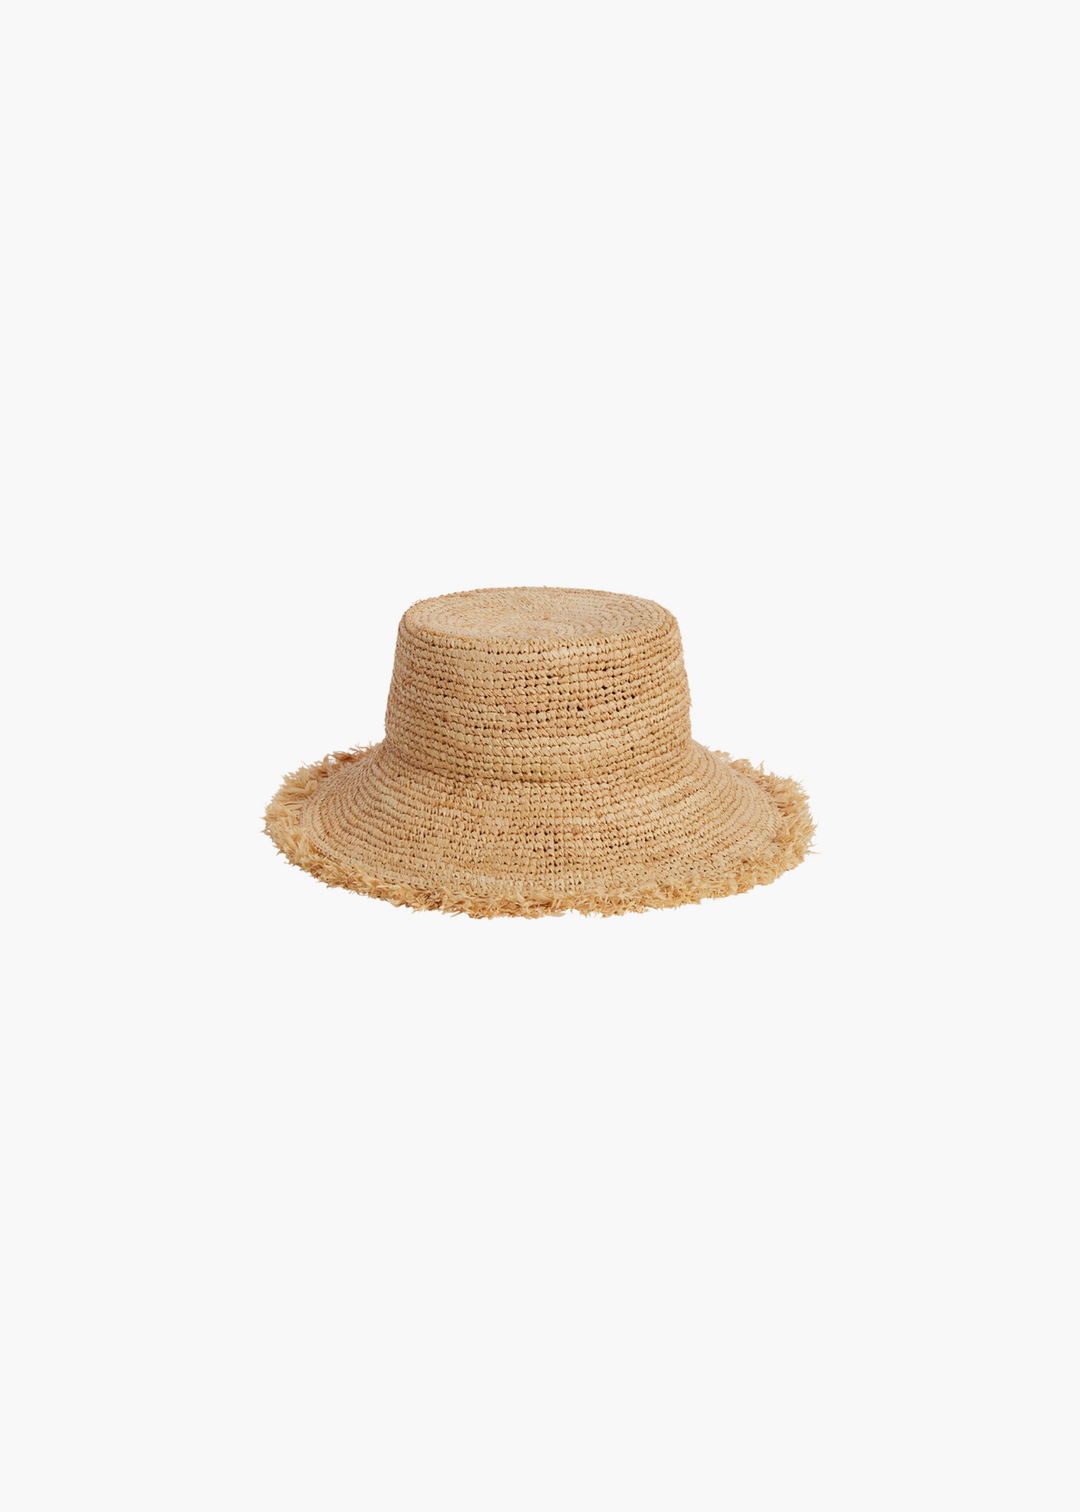 Straw Bucket Hat || Straw